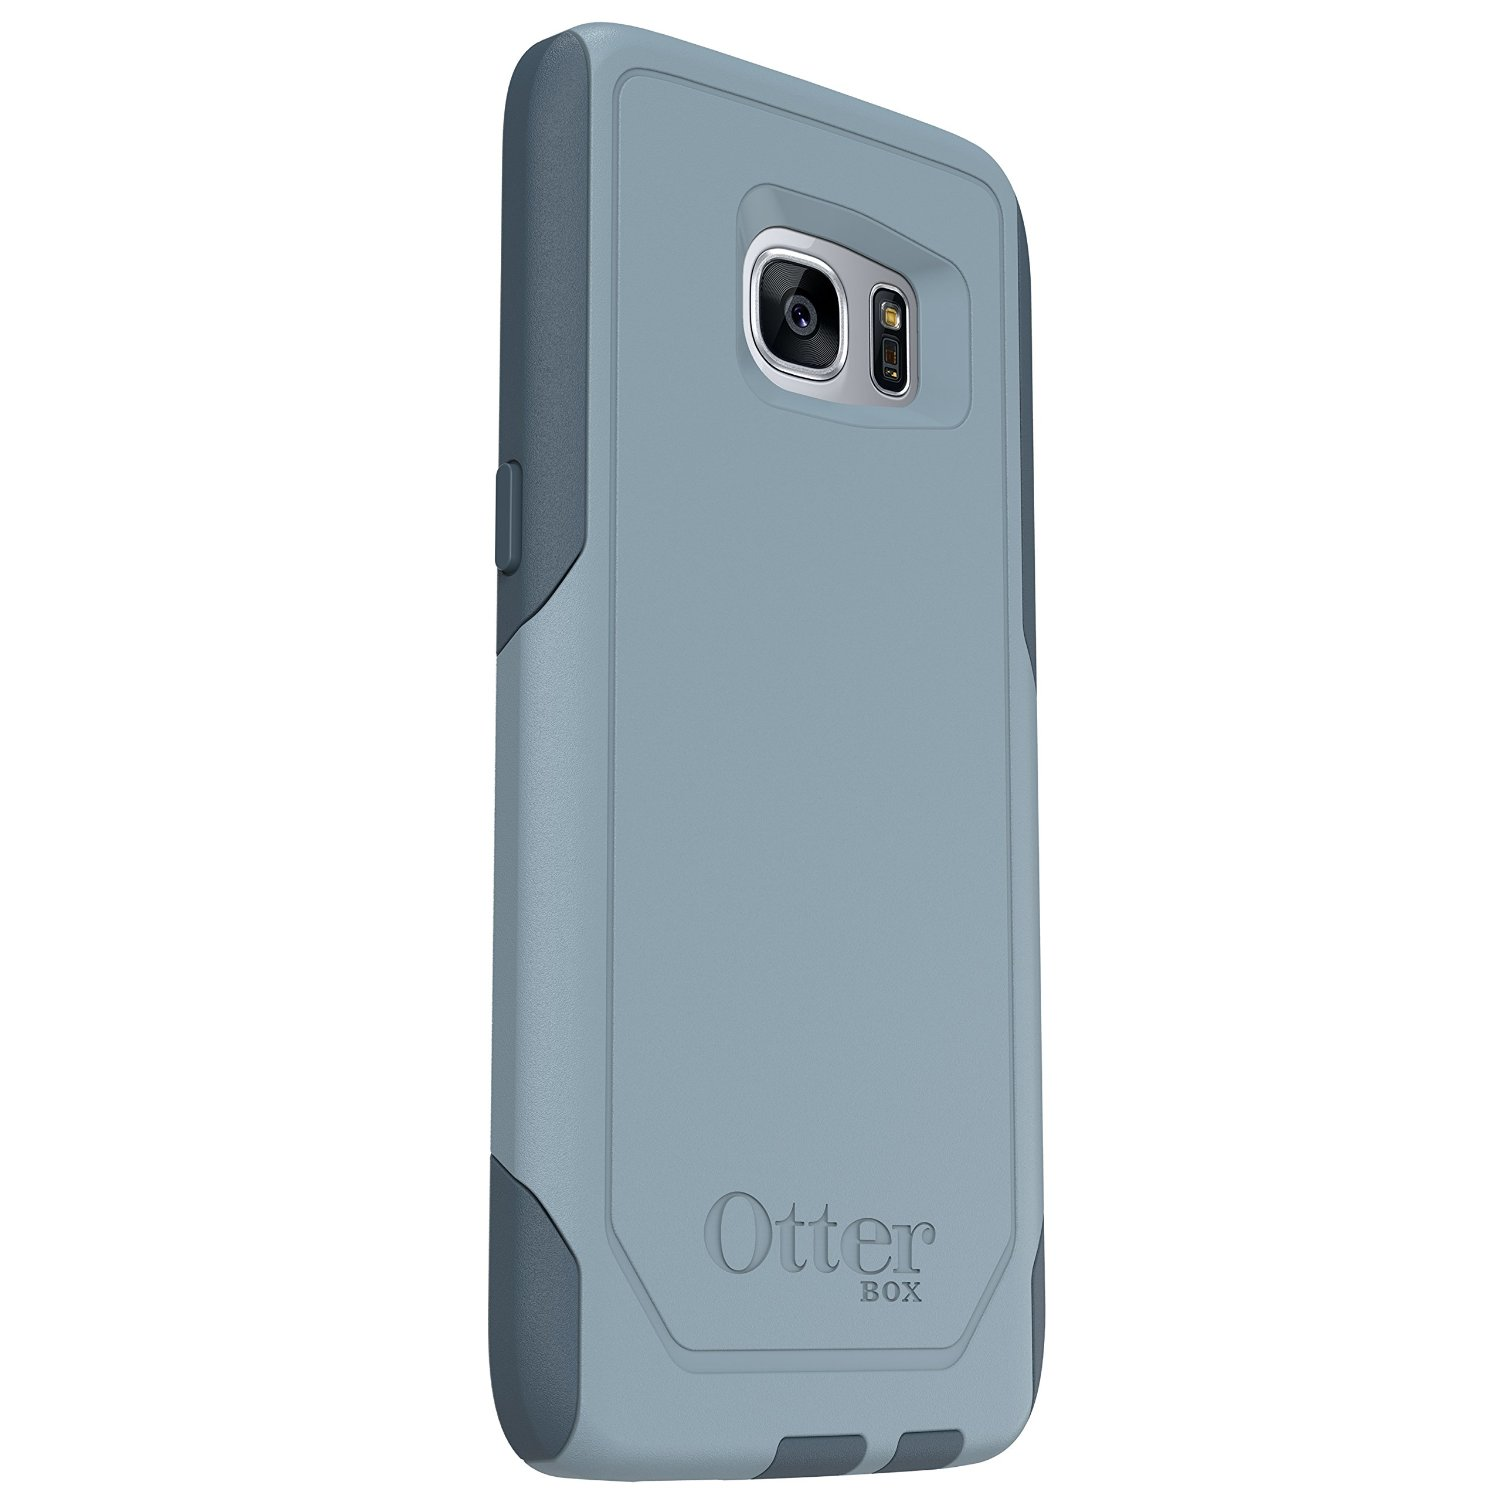 HQ slim cover case funda protectora de Krusell para Samsung Galaxy s7 sm-g930f azul 